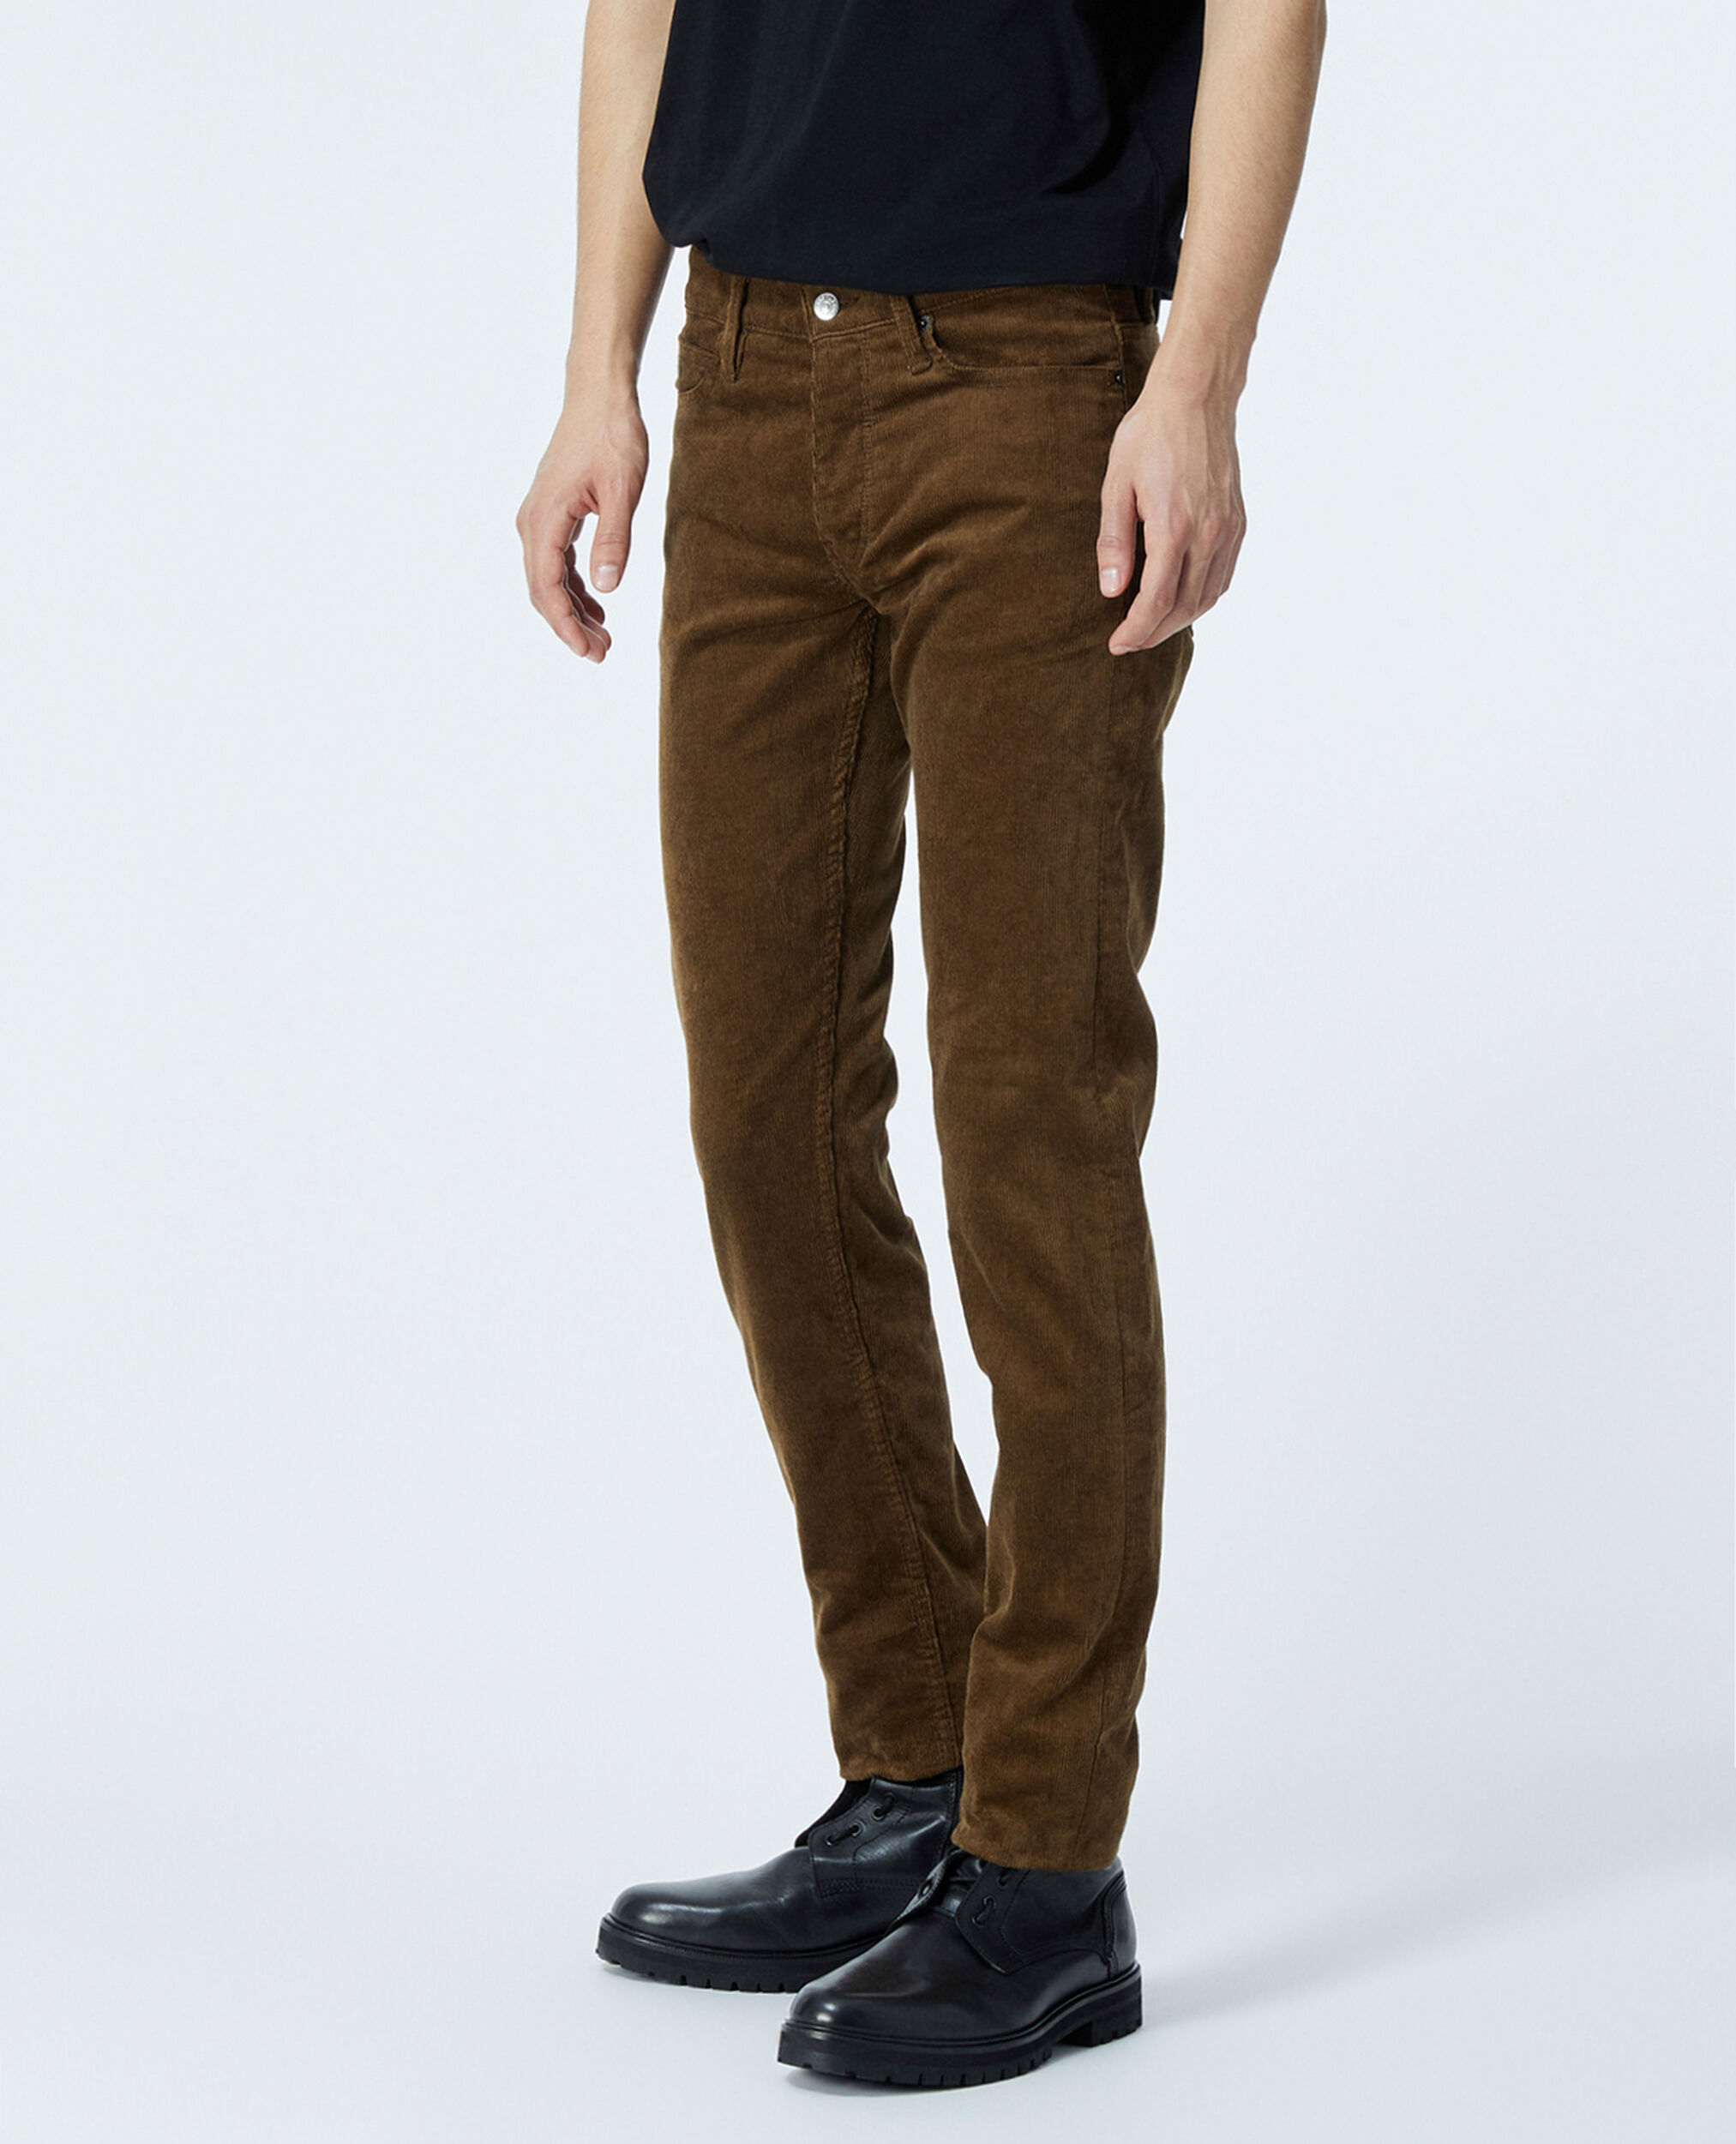 Ribbed brown velvet jeans, TABACCO, hi-res image number null